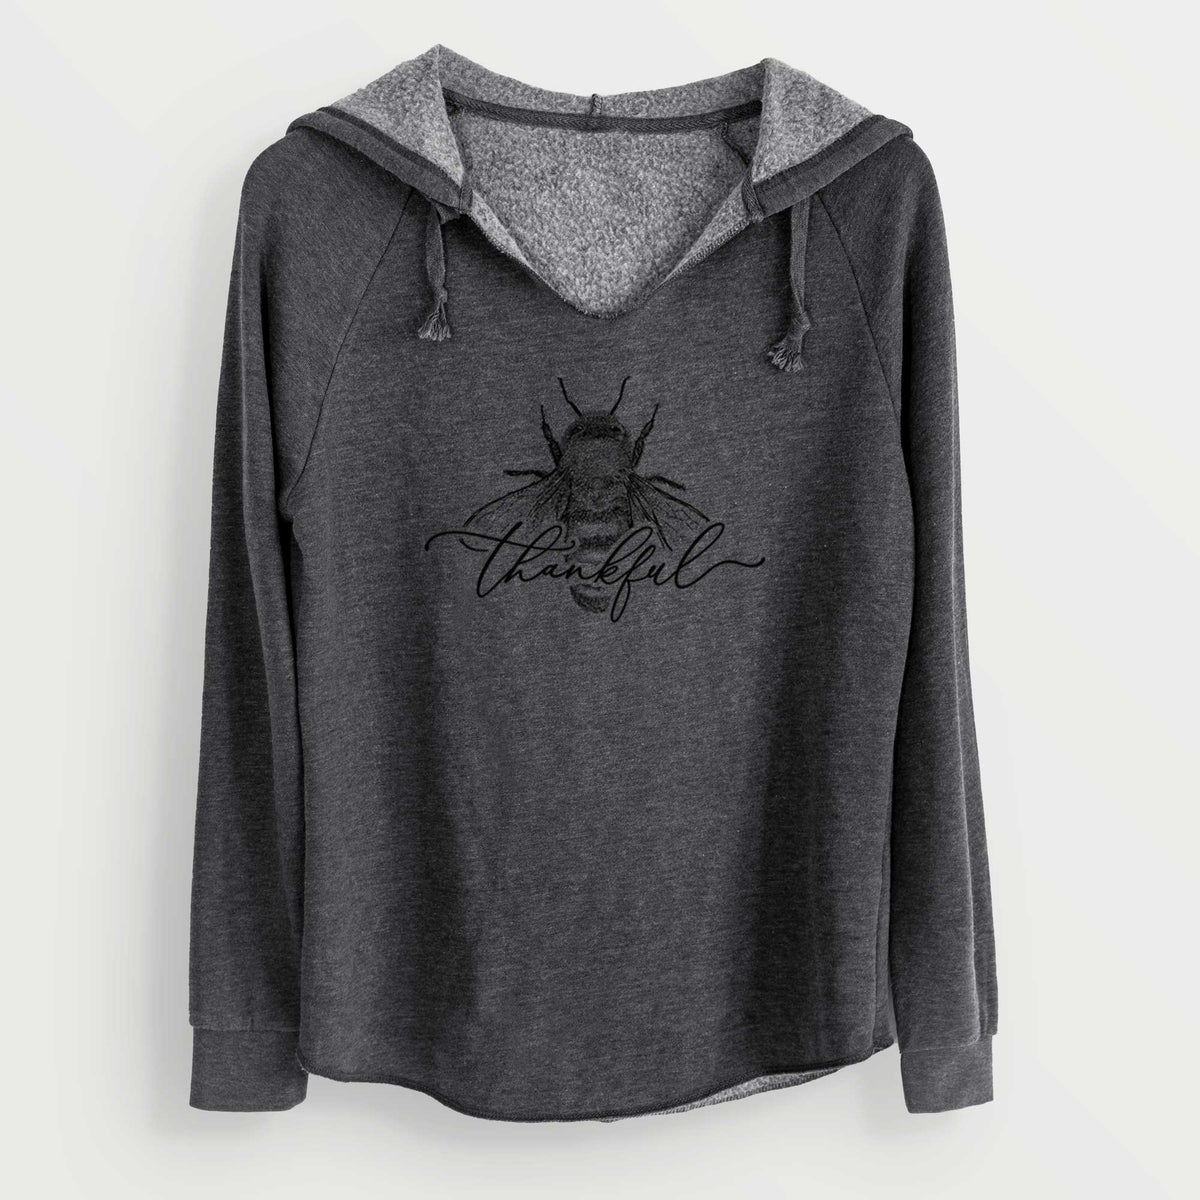 Bee Thankful - Cali Wave Hooded Sweatshirt